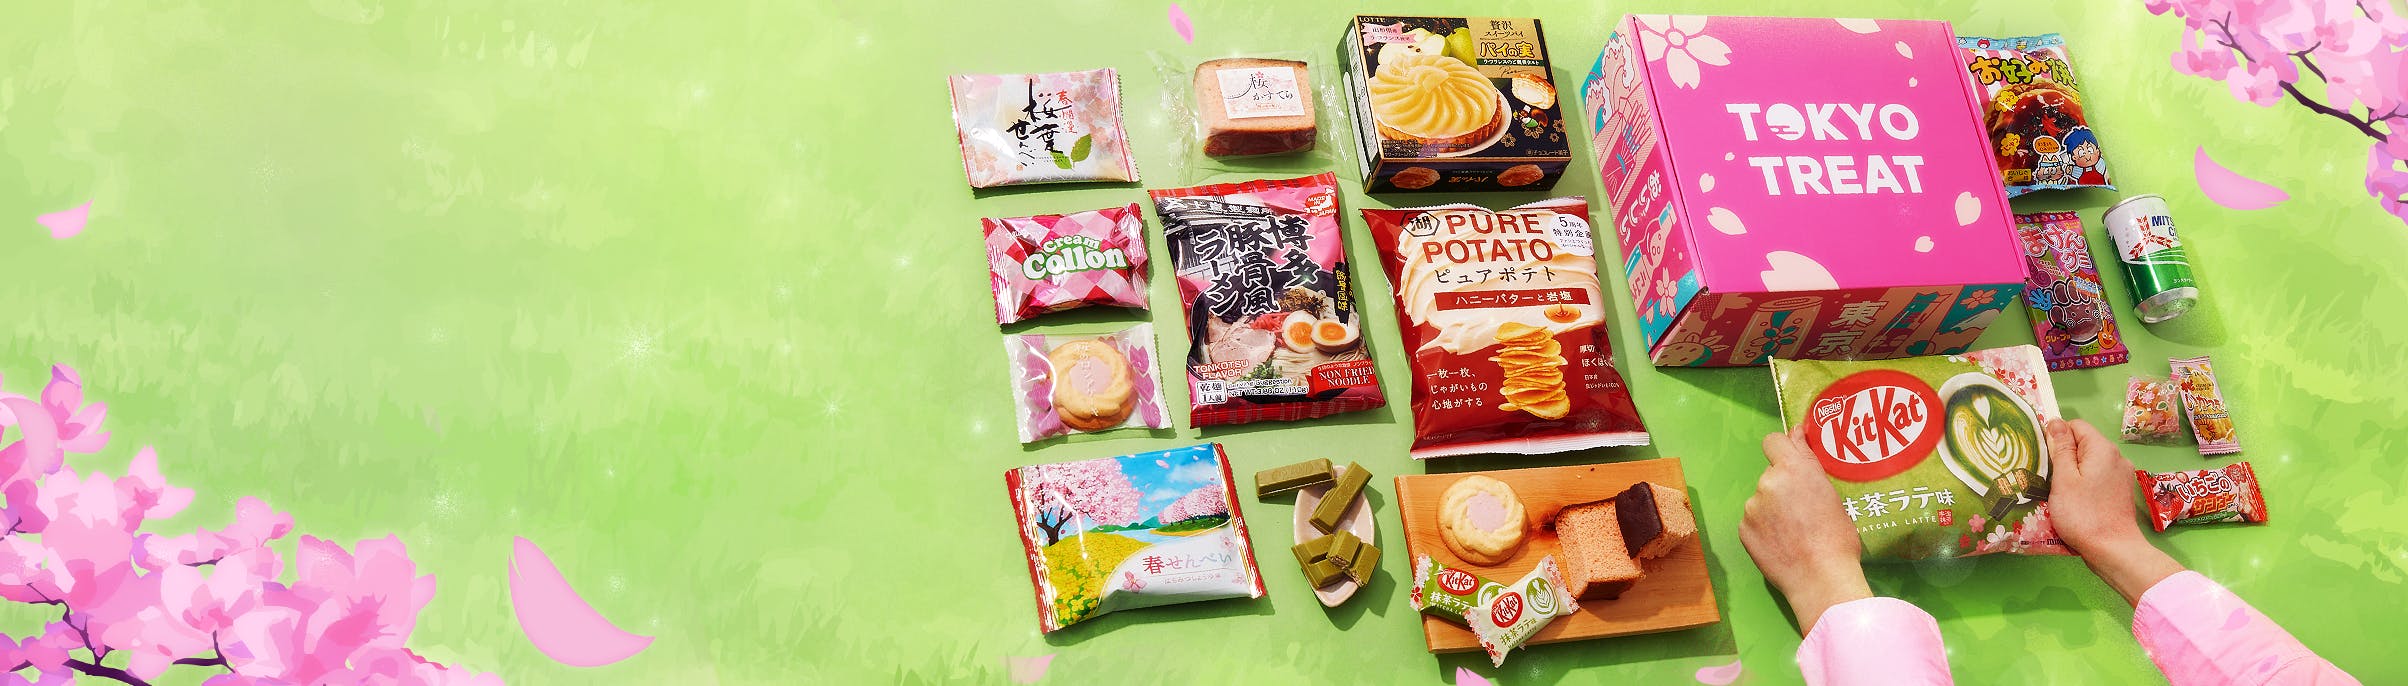 Chuches Japonesas de Tokyo Treat! 